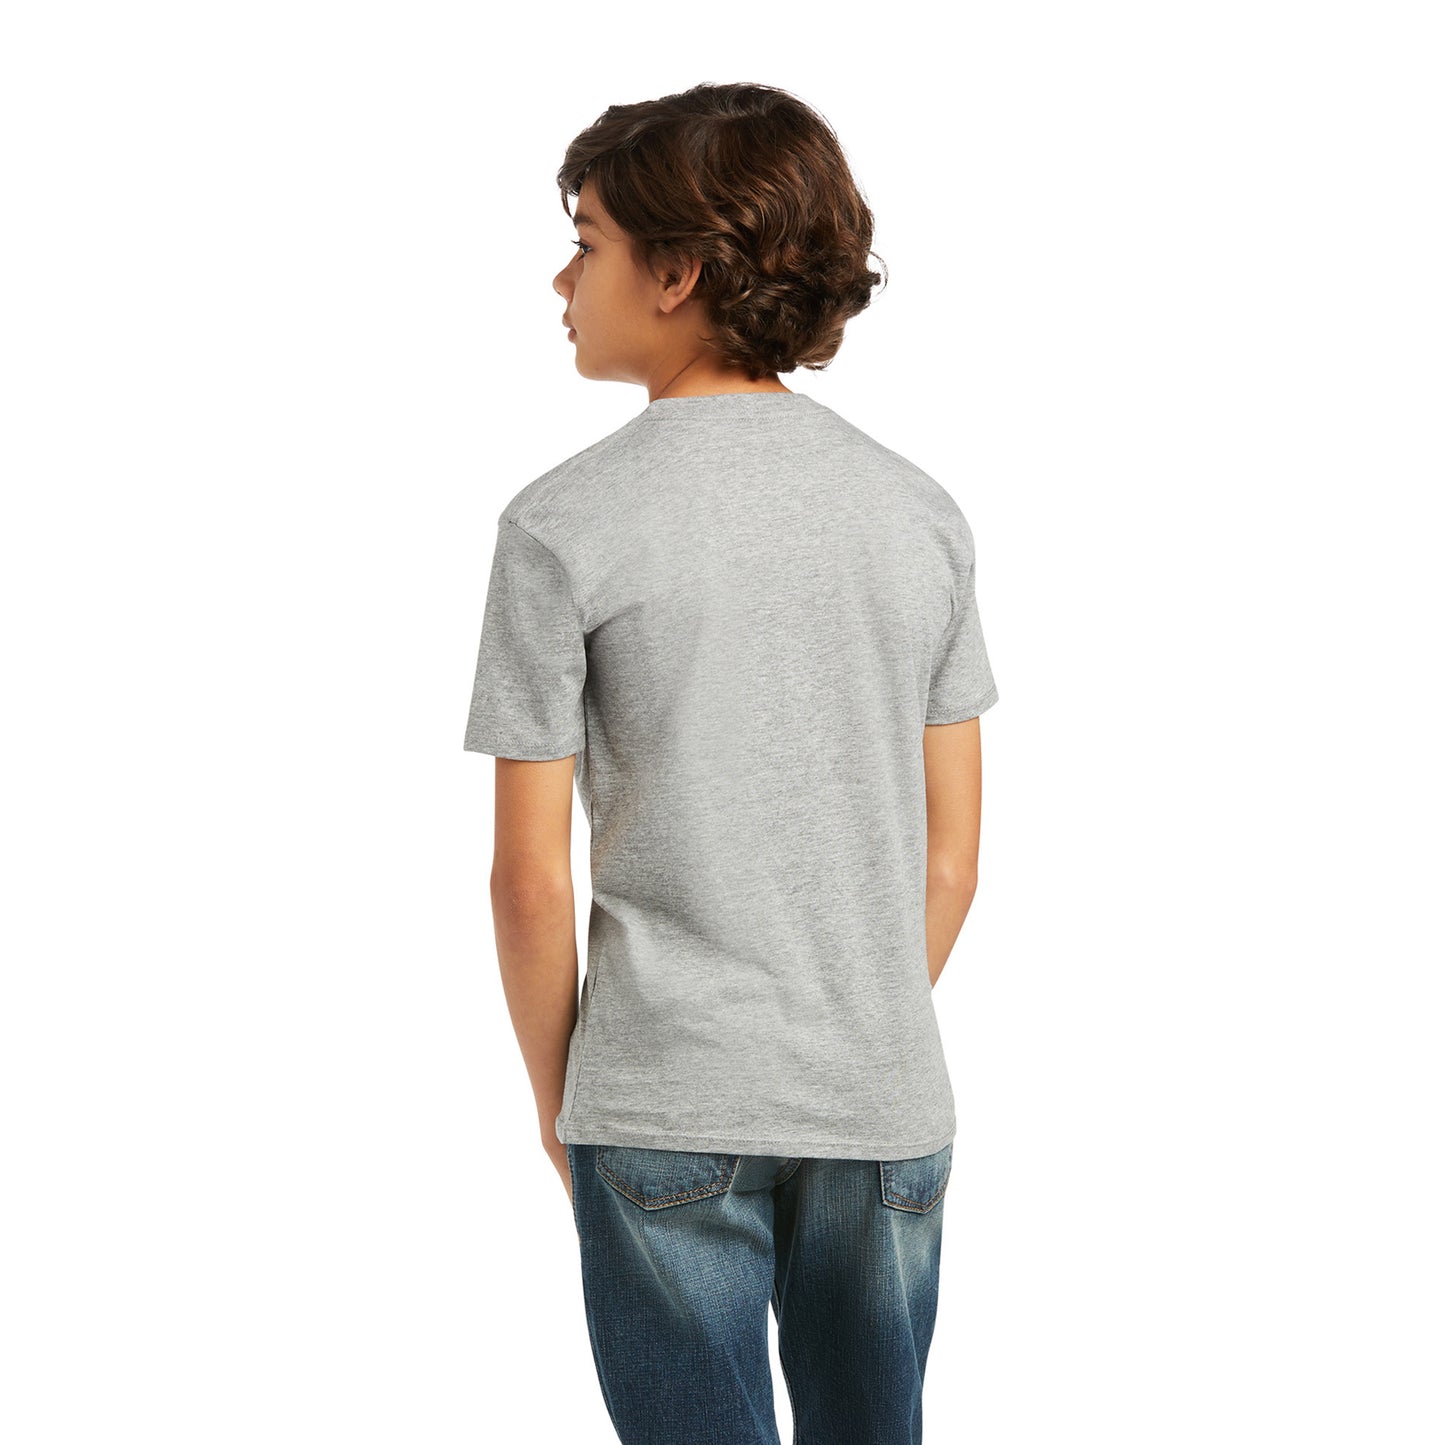 Ariat® Youth Boy's Short Sleeve Blends Heather Grey T-Shirt 10039936